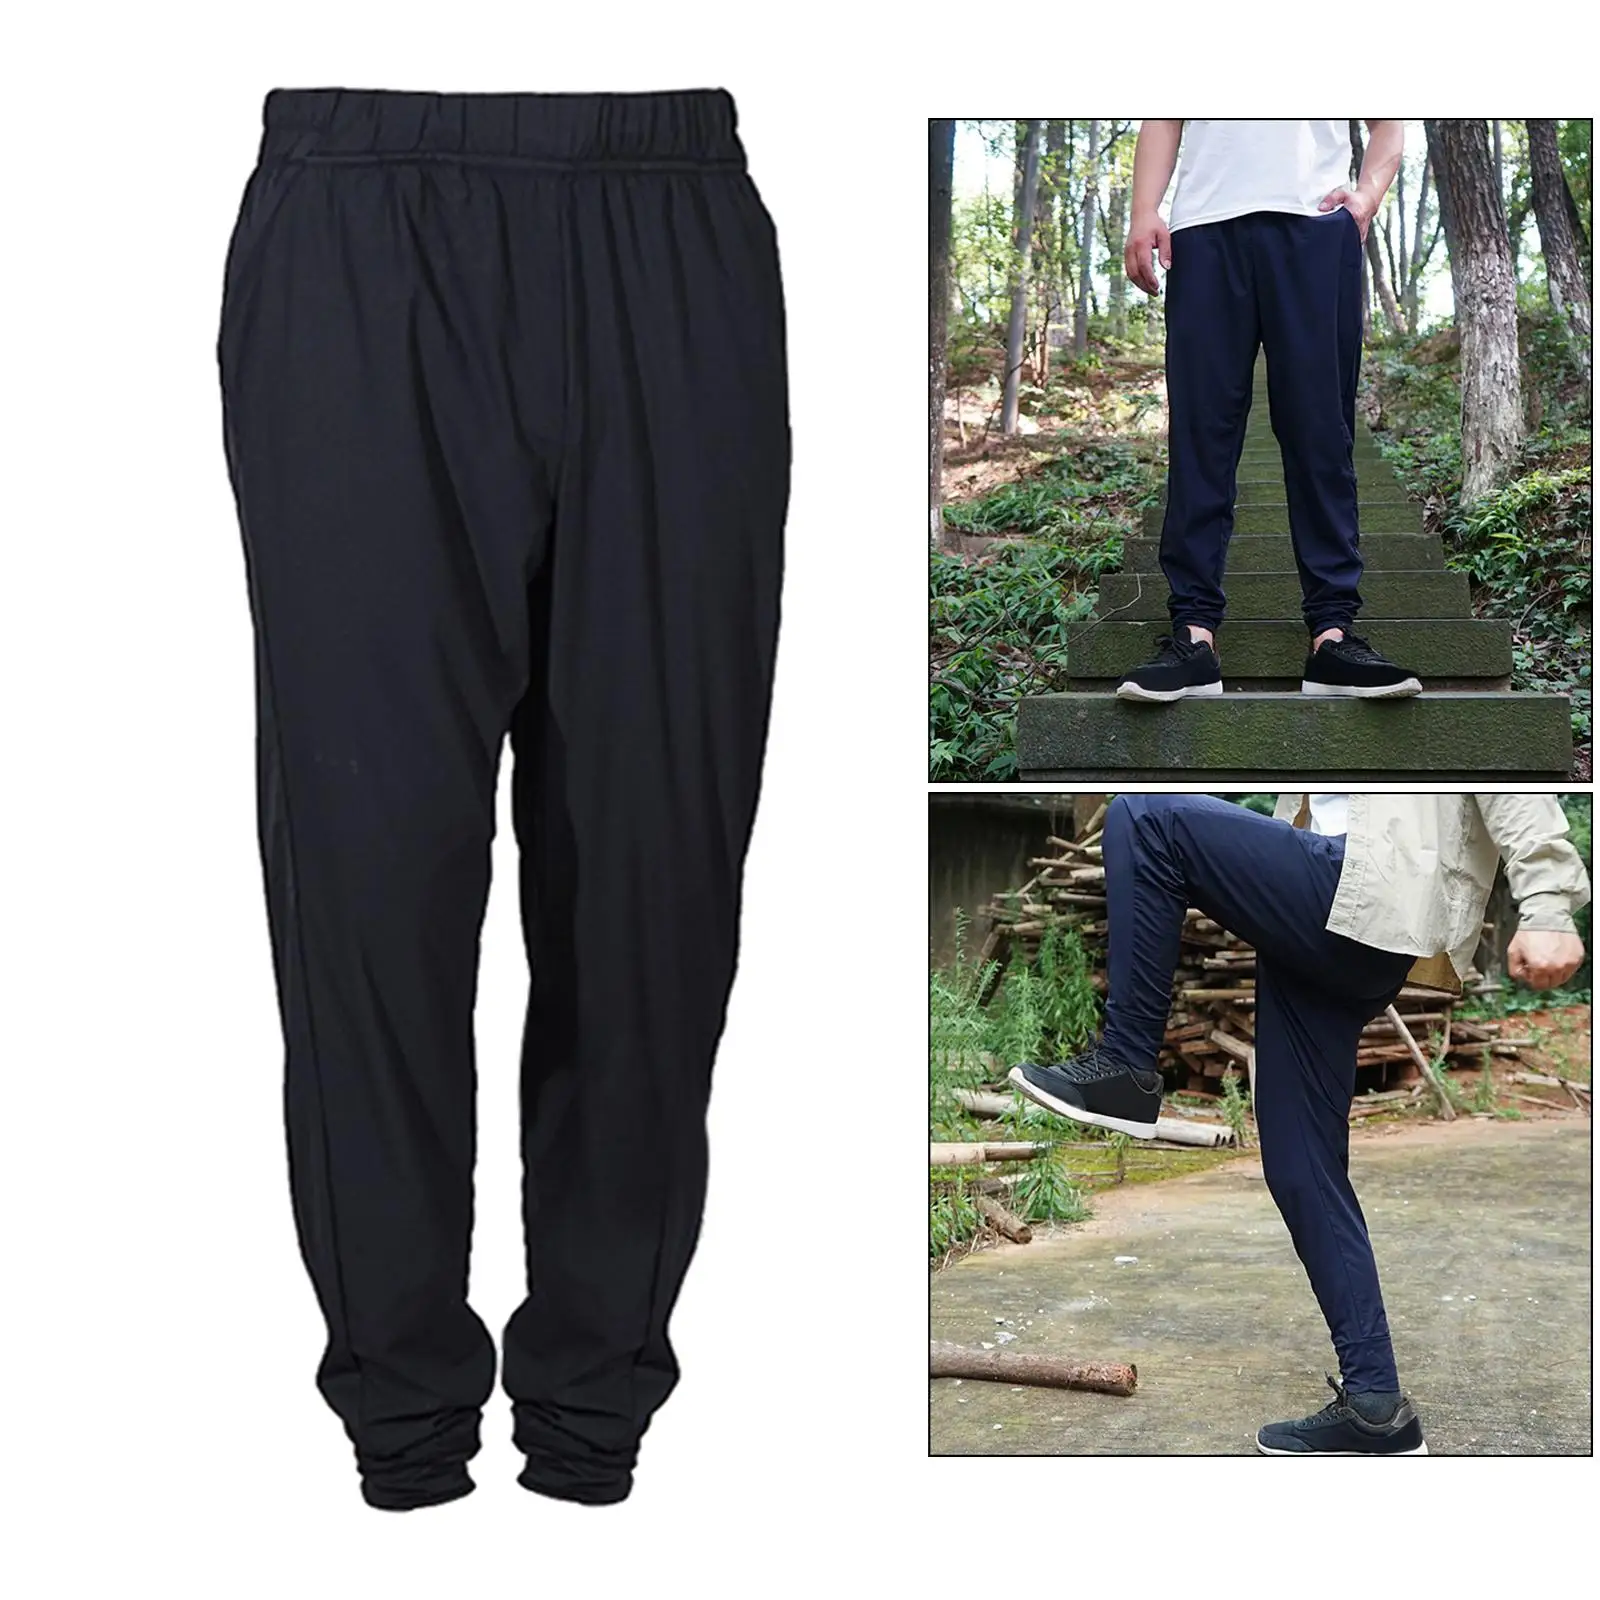 Elastic Waist Hiking Water Resistant Pants  Athletic Lightweight Breathable Sweatpants Casual Pants Black